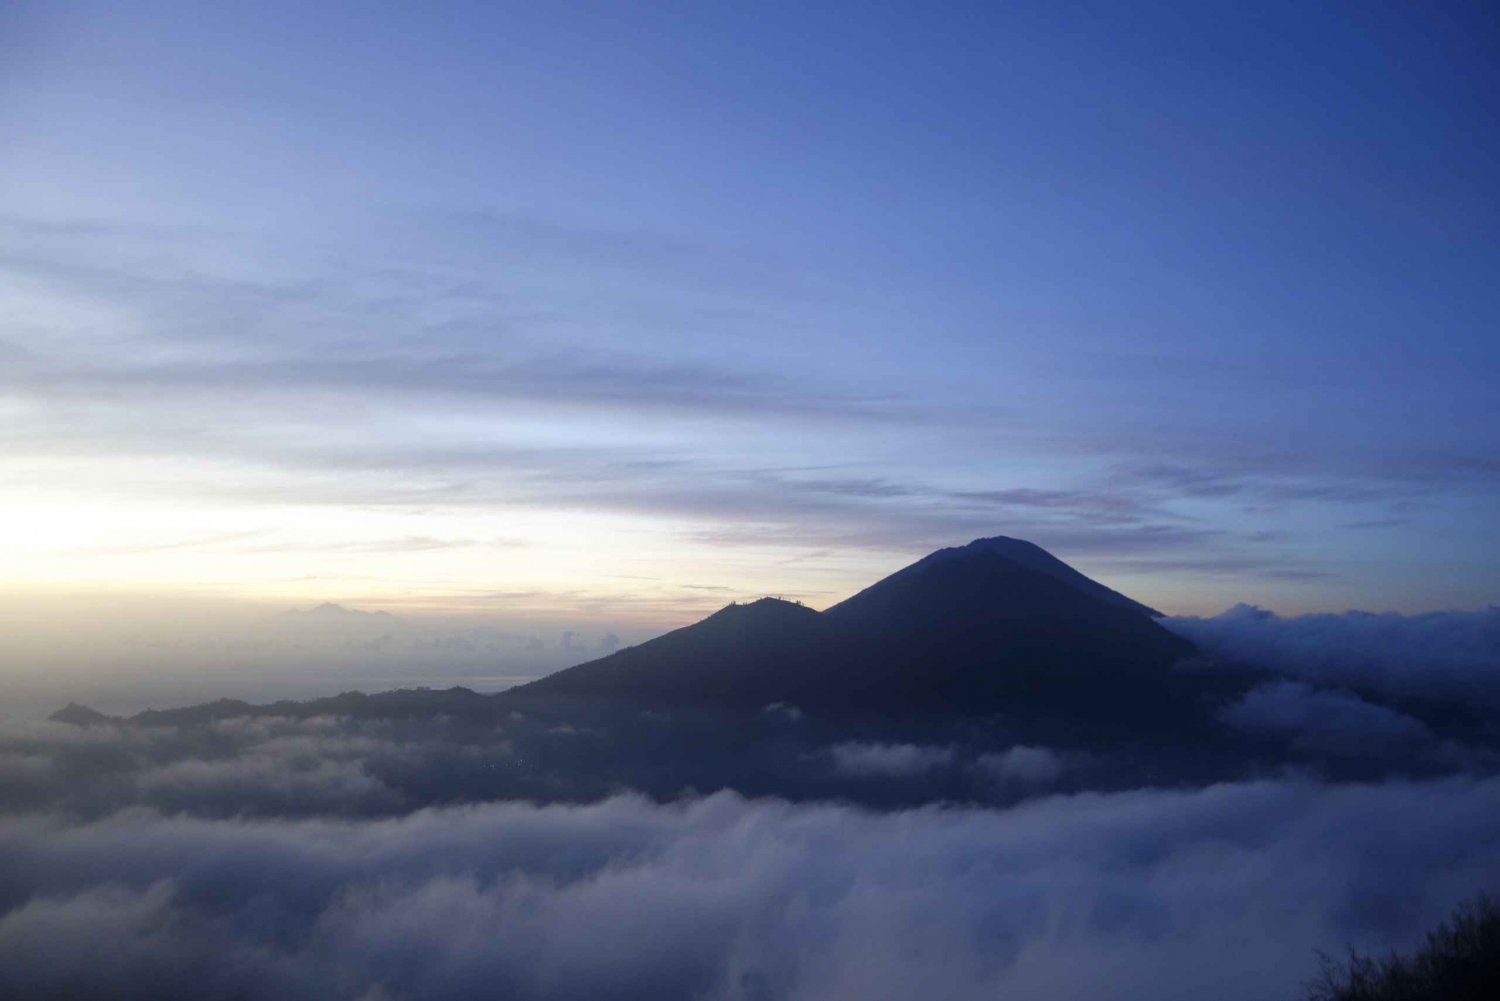 Bali: Mount Batur Sunrise Hike and Natural Hot Spring